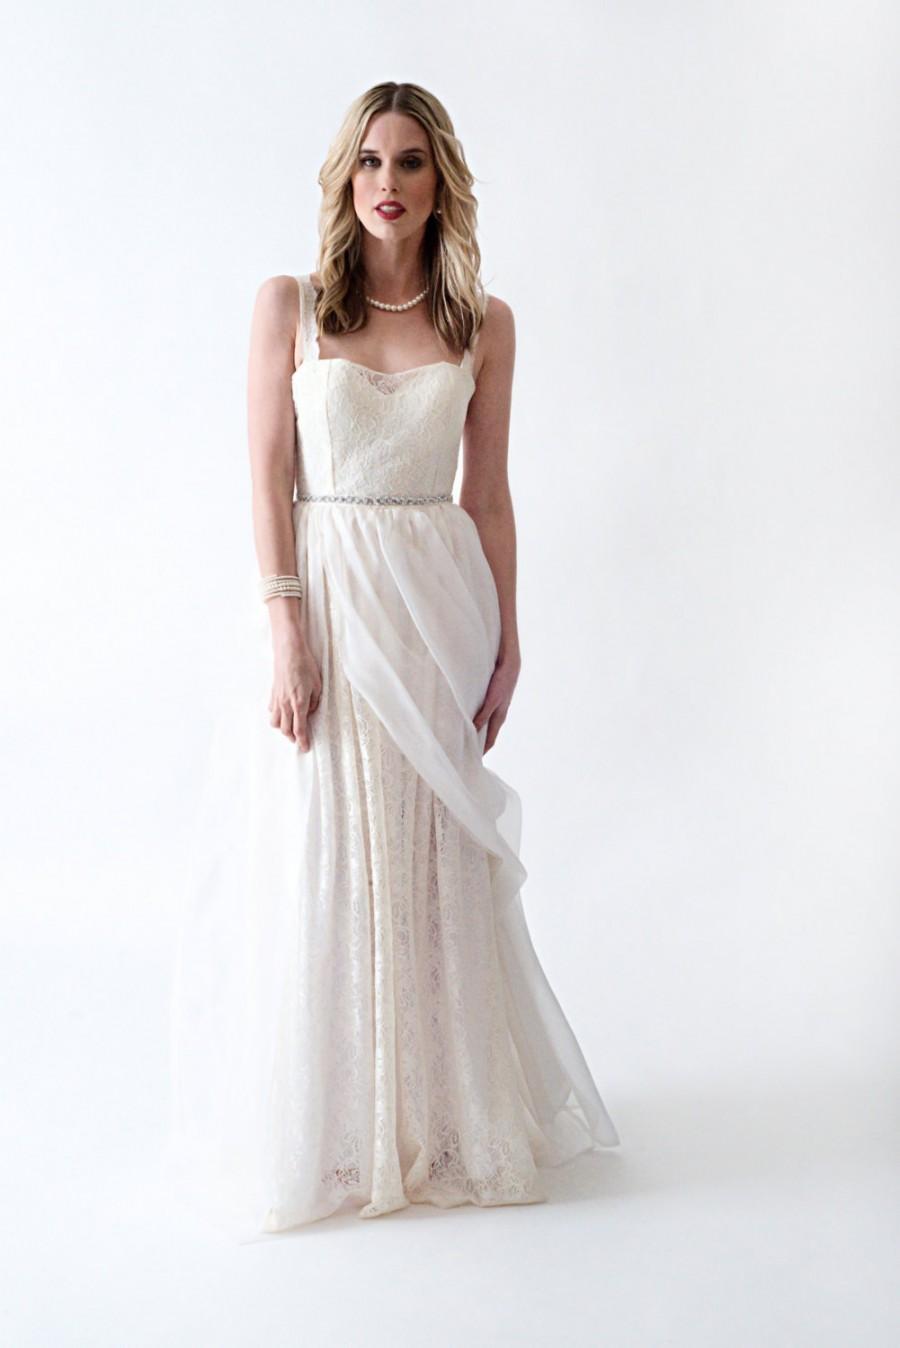 زفاف - Fall Sale Ends Nov 30th Princess Boho lace Wedding Dress with straps Organza skirt Gathered Waist